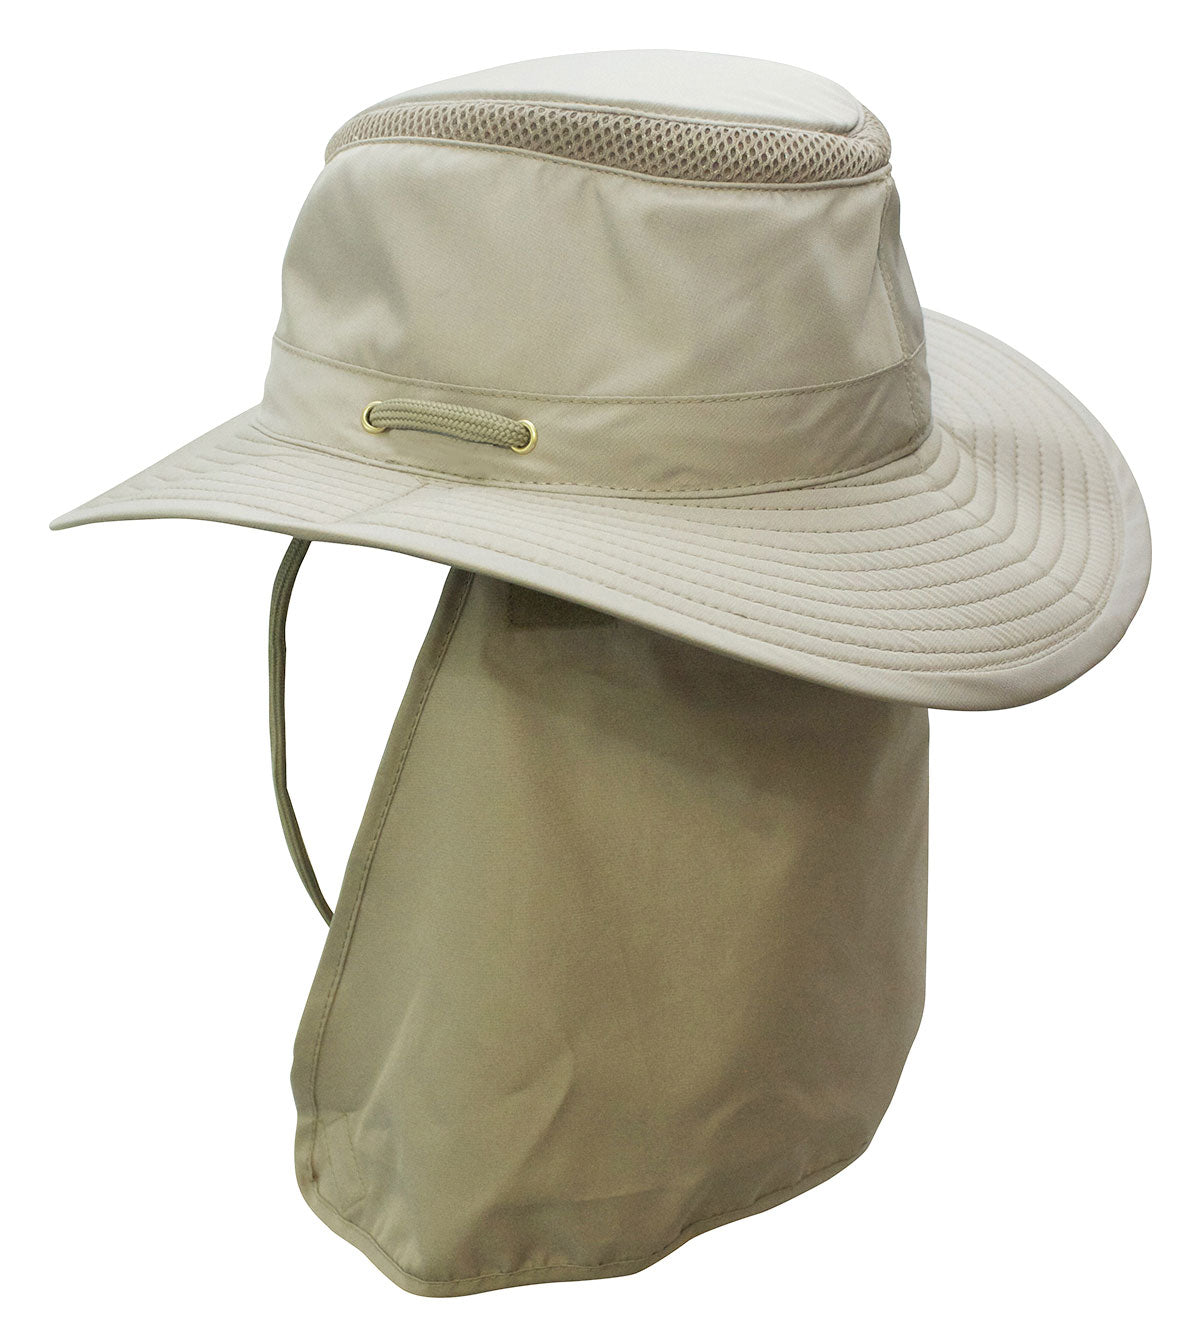 Women Sun Boat Hats Raffia Wide Brim Boater Hat Brim Straw Hat